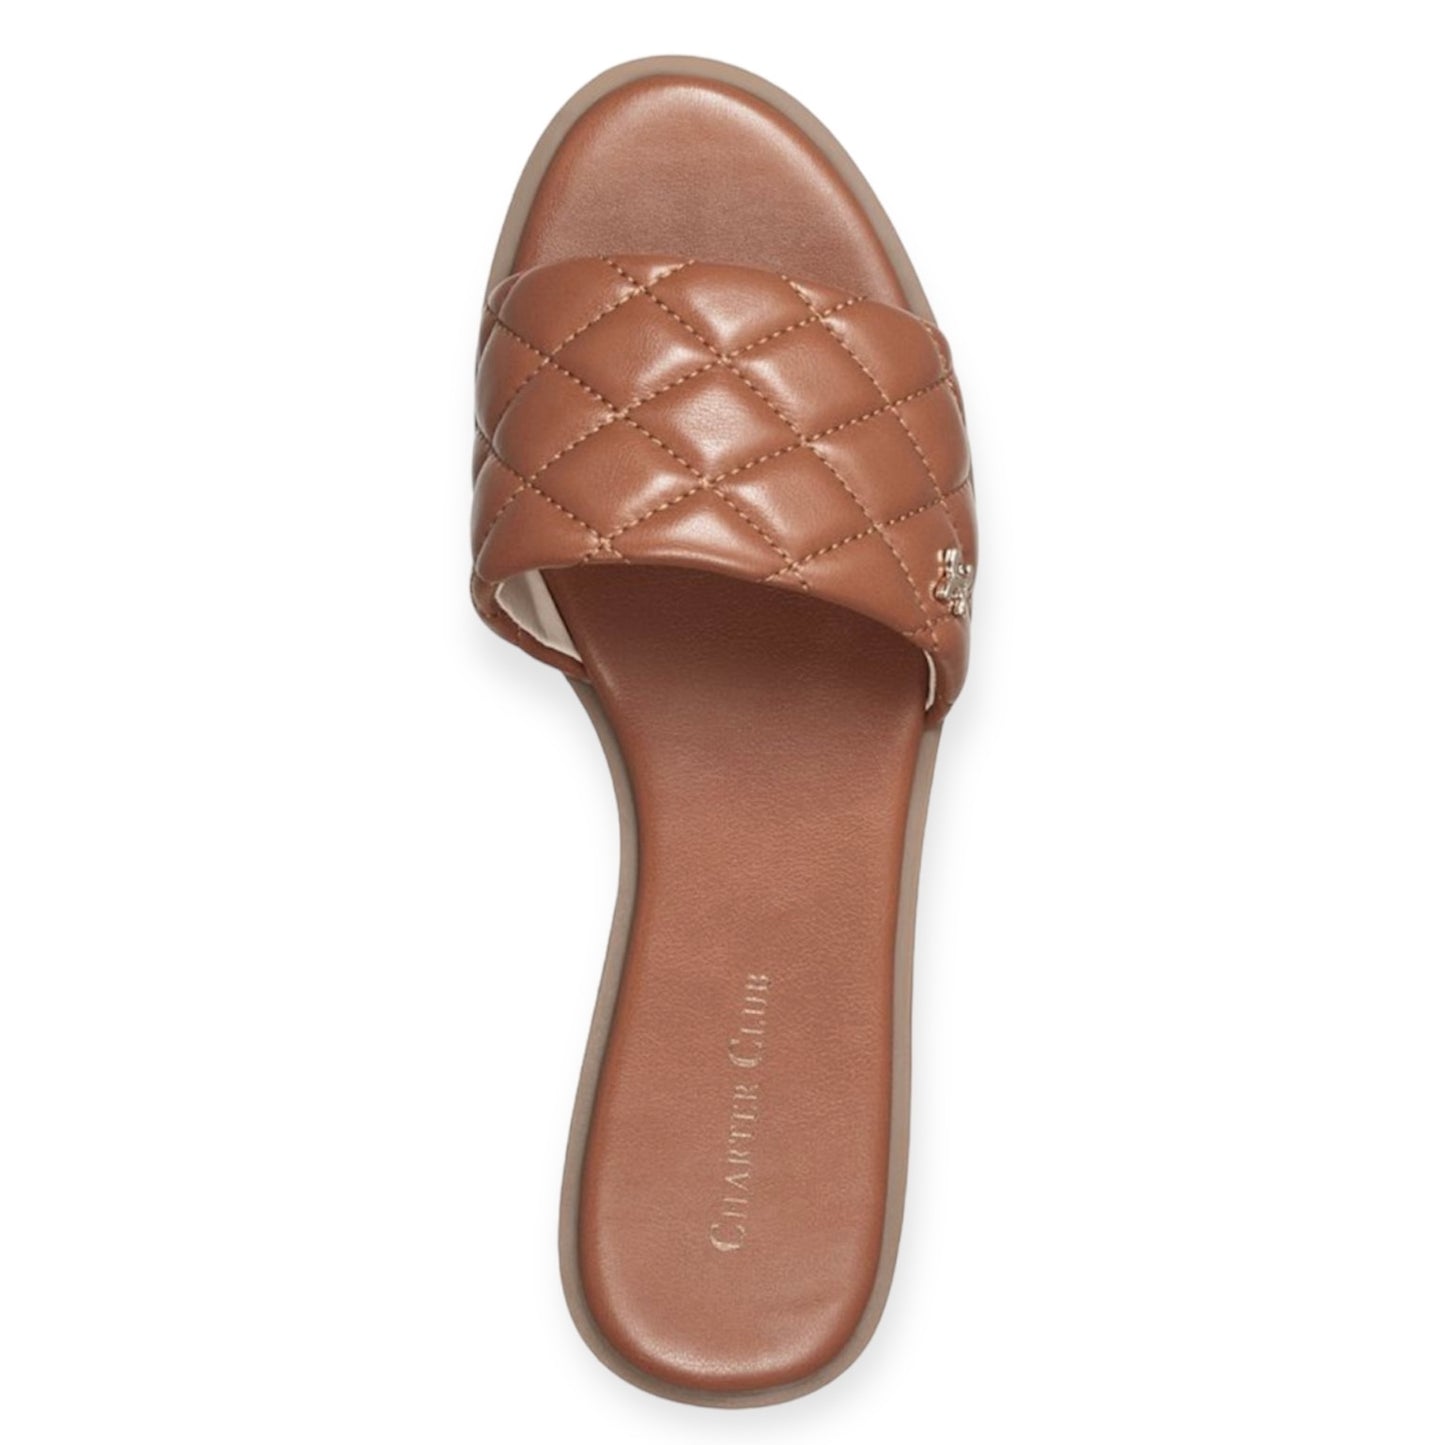 SAFFIEE Cognac Flats Slip On Quilted Round Toe Women's Sandals